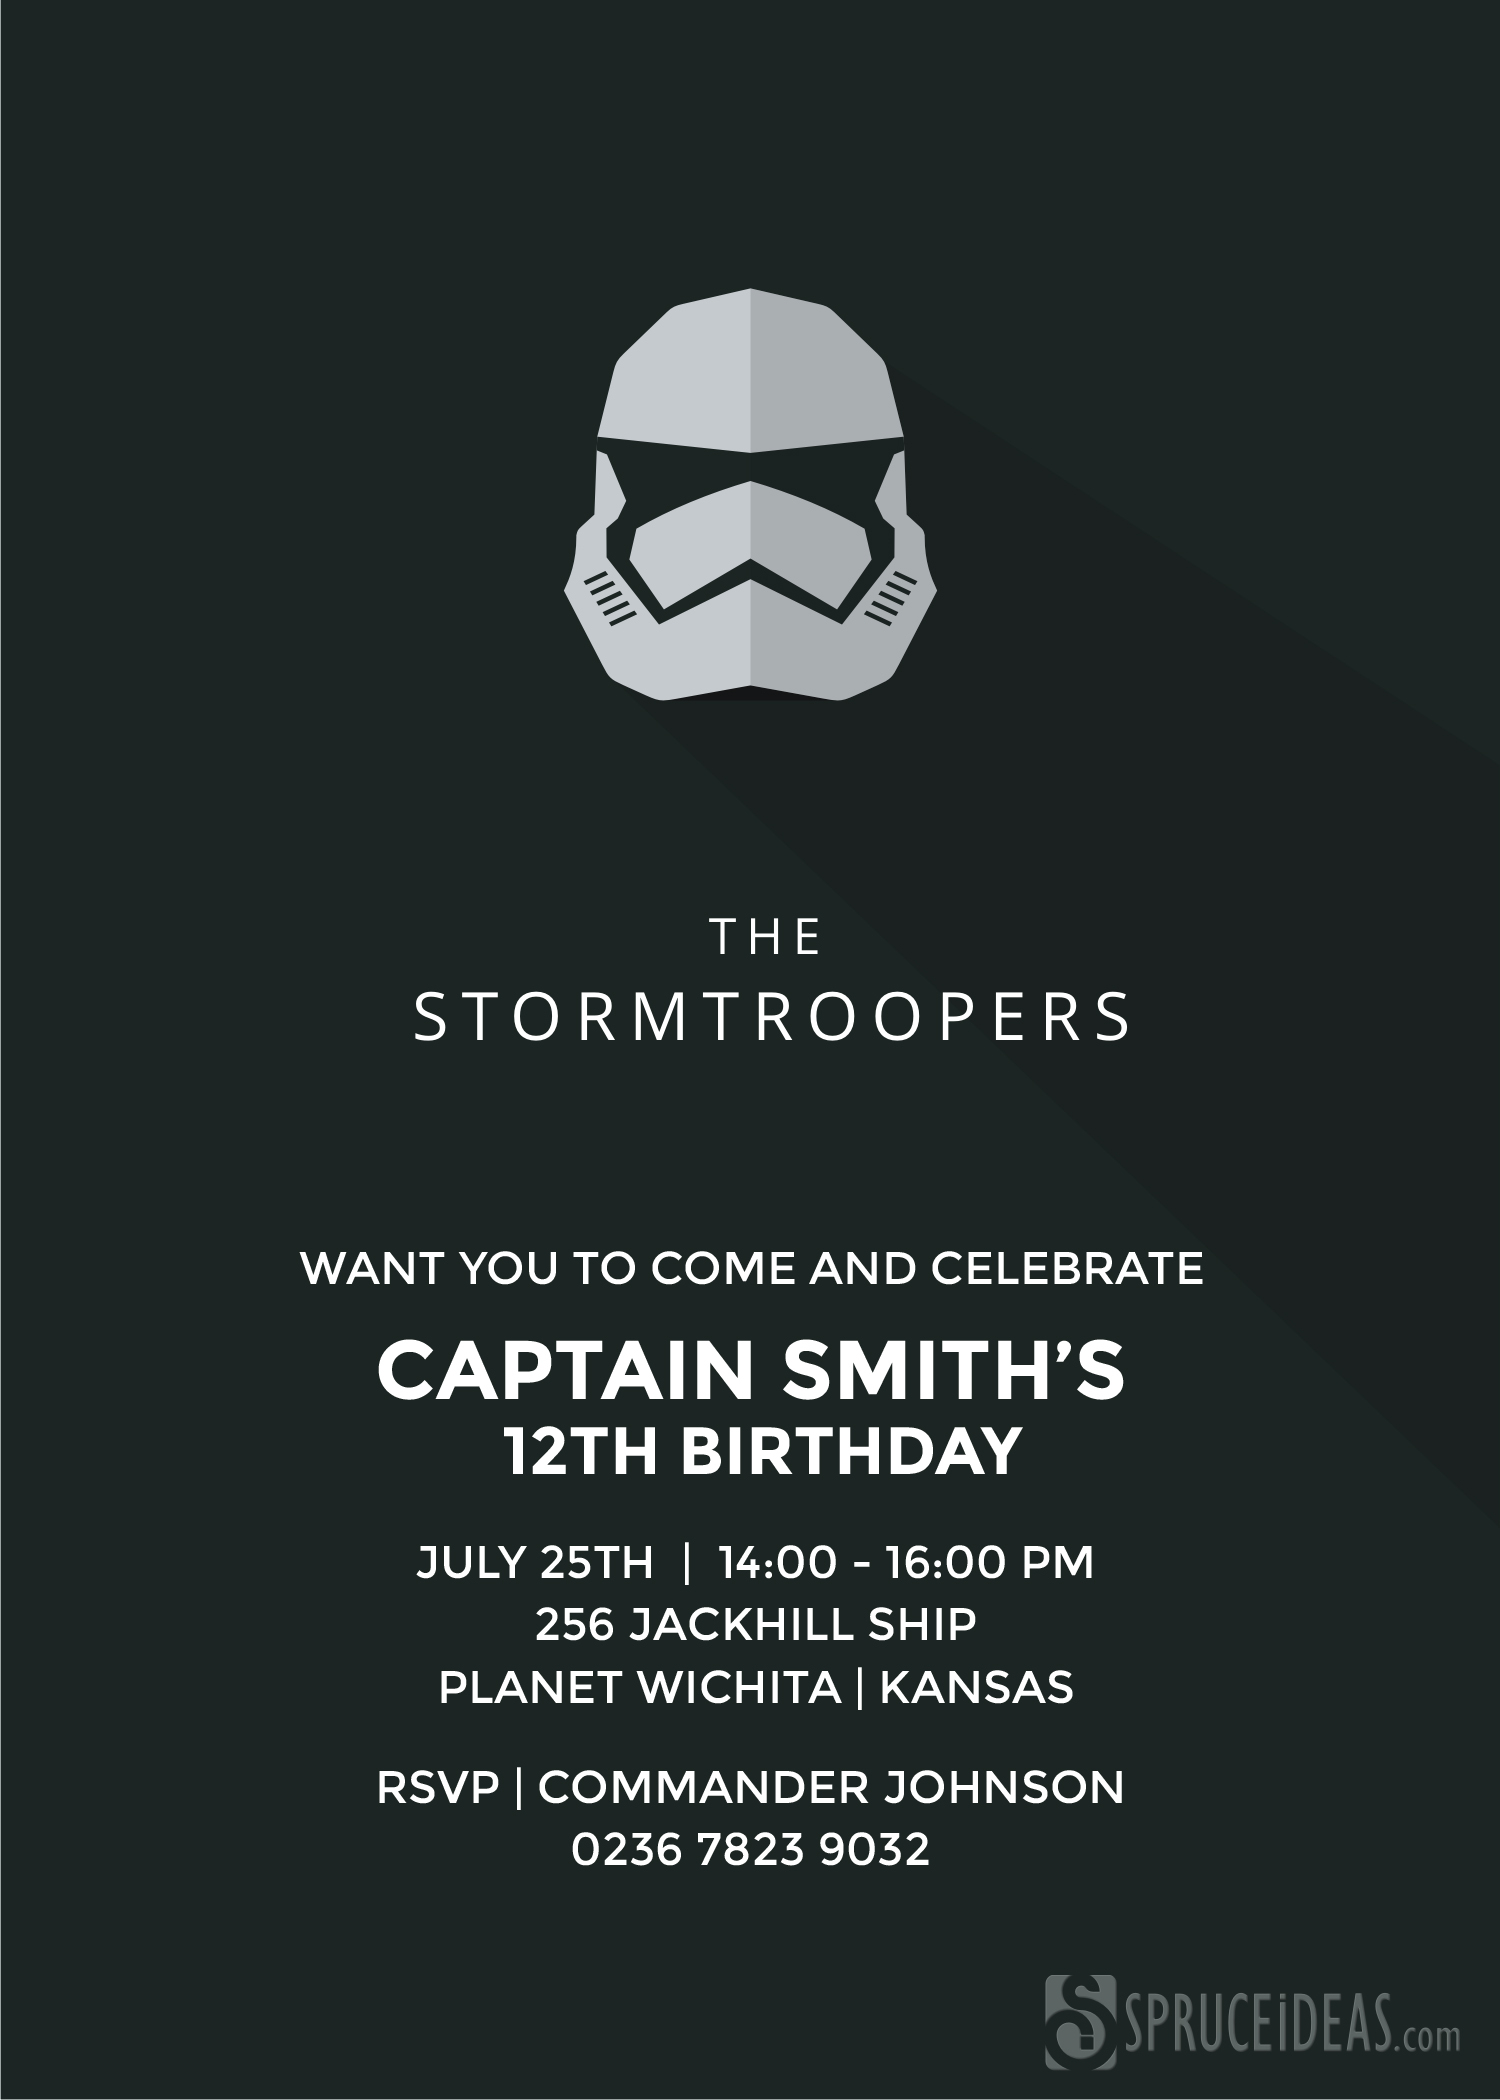 Star Wars Birthday Card Ideas Star Wars Stormtrooper Birthday Invitation Template Card Design